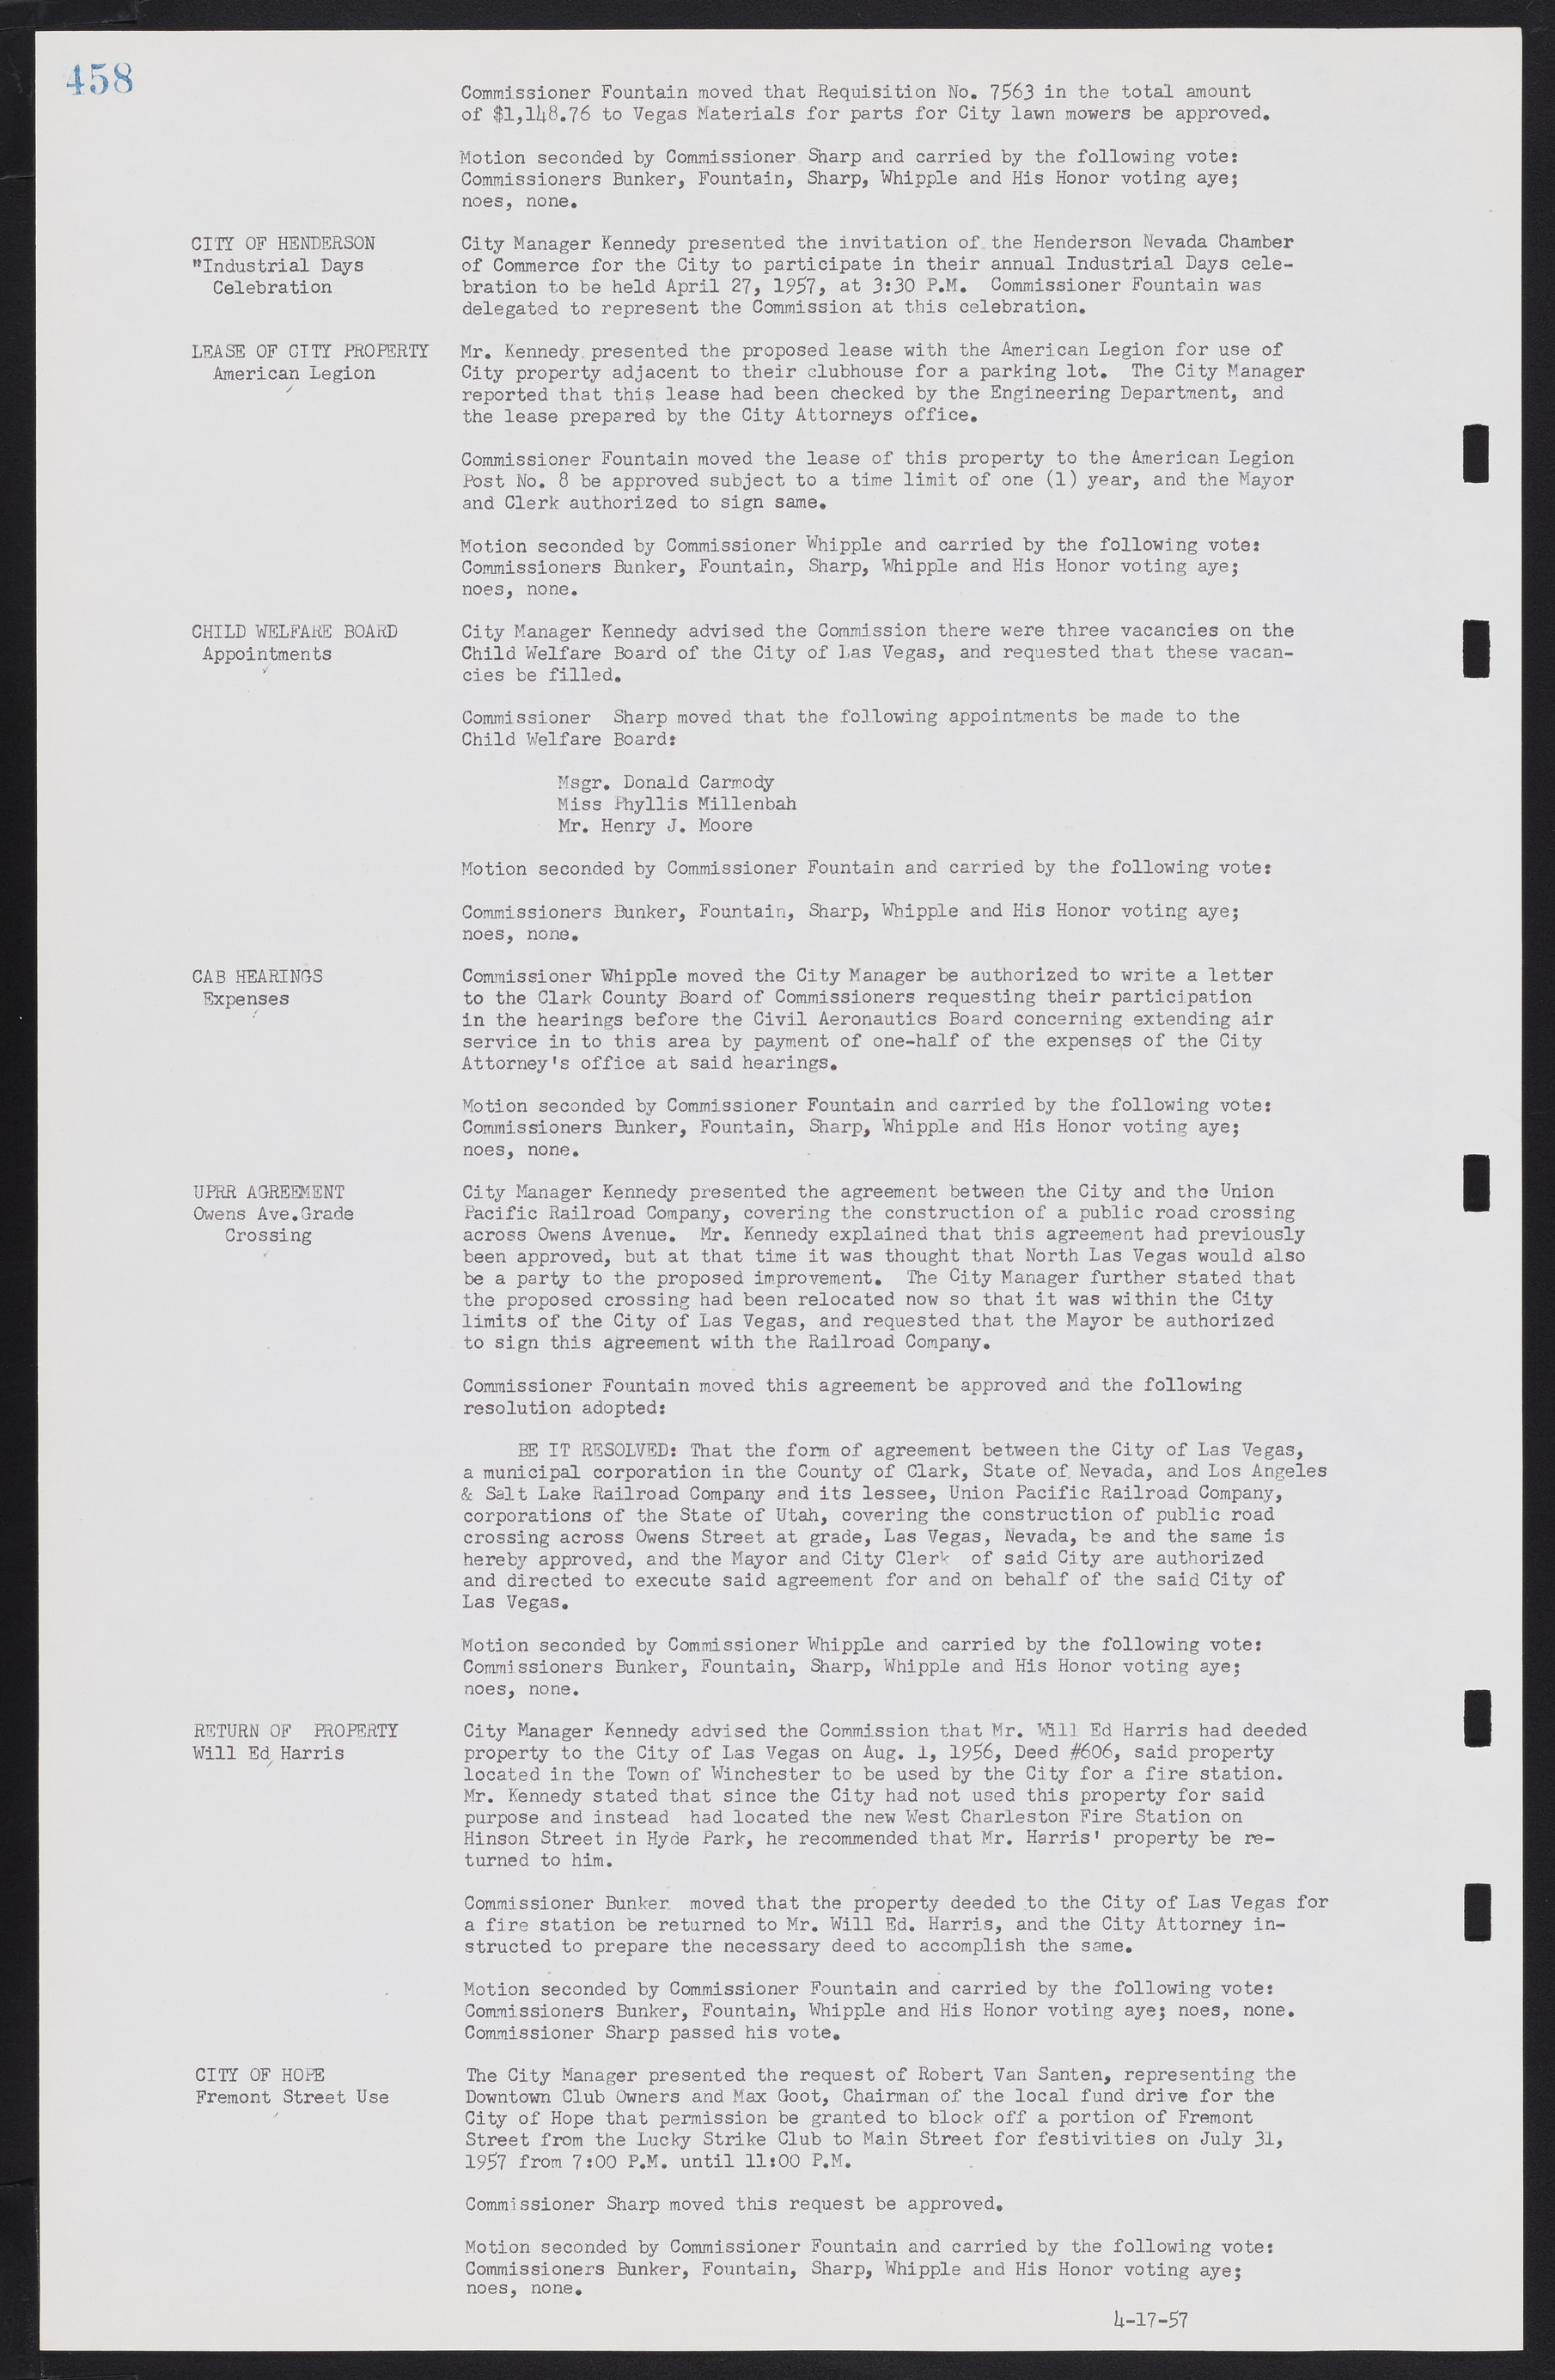 Las Vegas City Commission Minutes, September 21, 1955 to November 20, 1957, lvc000010-478